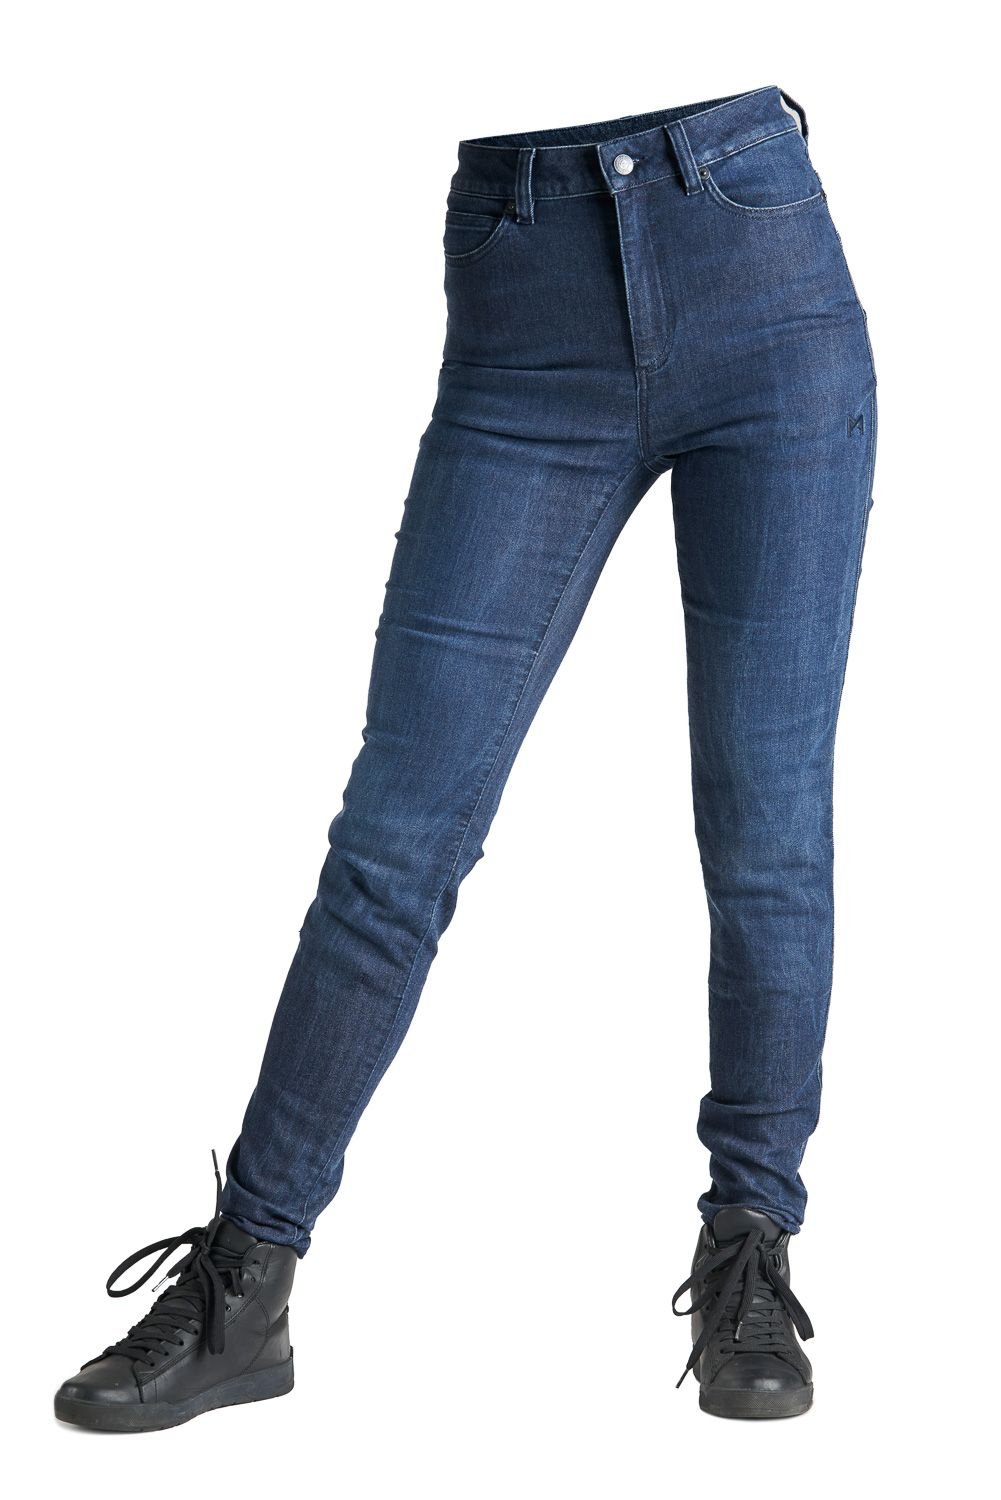 Image of Pando Moto Kusari Cor 02 Women Motorcycle Jeans Skinny-Fit Cordura Size W27/L34 ID 7851049505598